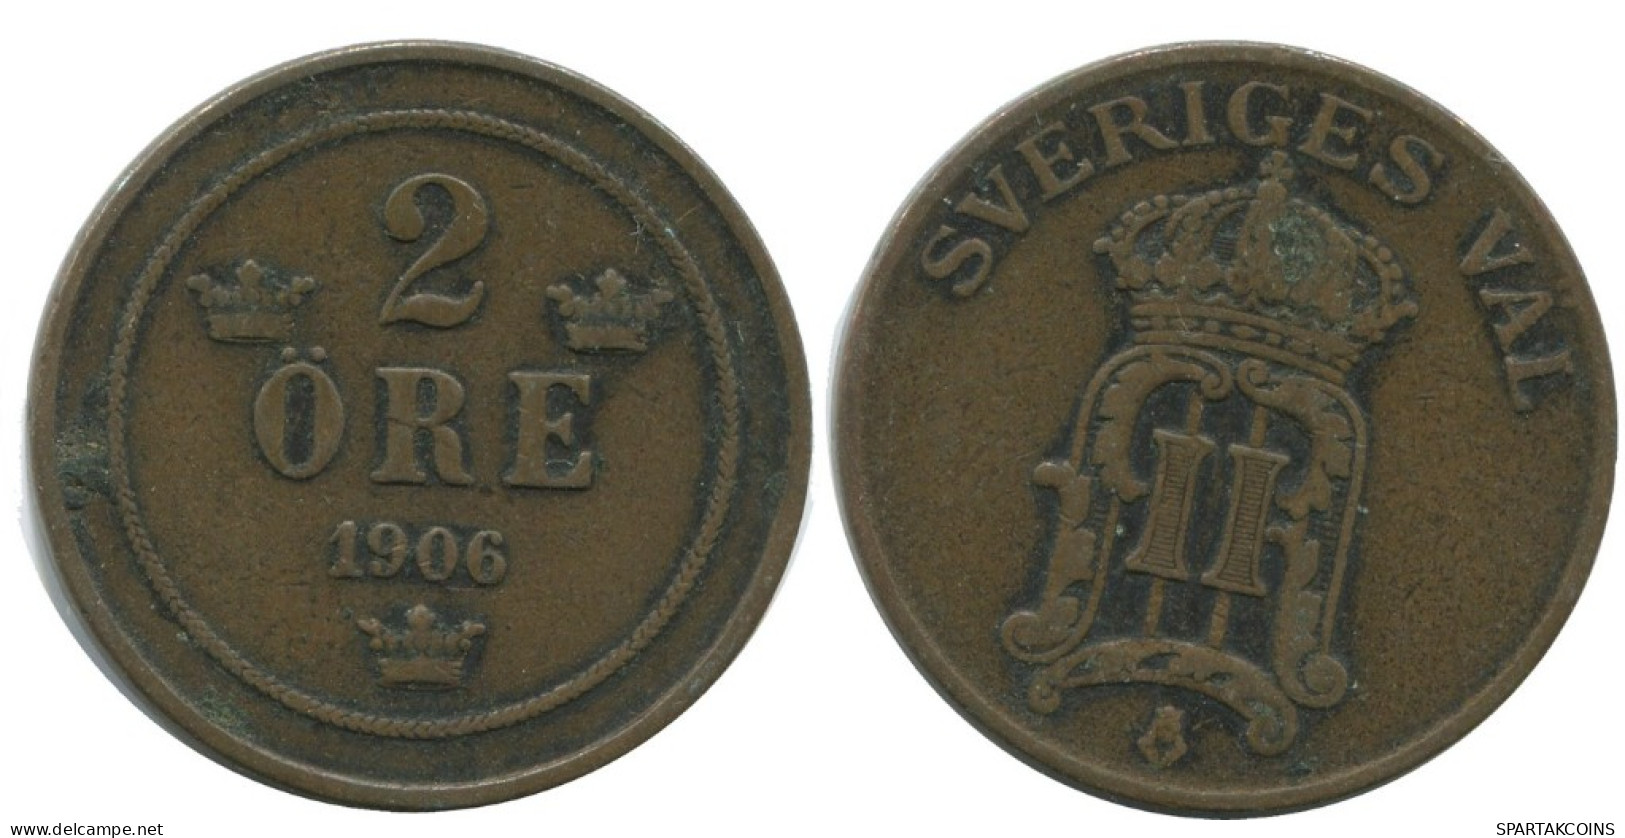 2 ORE 1906 SWEDEN Coin #AC985.2.U.A - Sweden